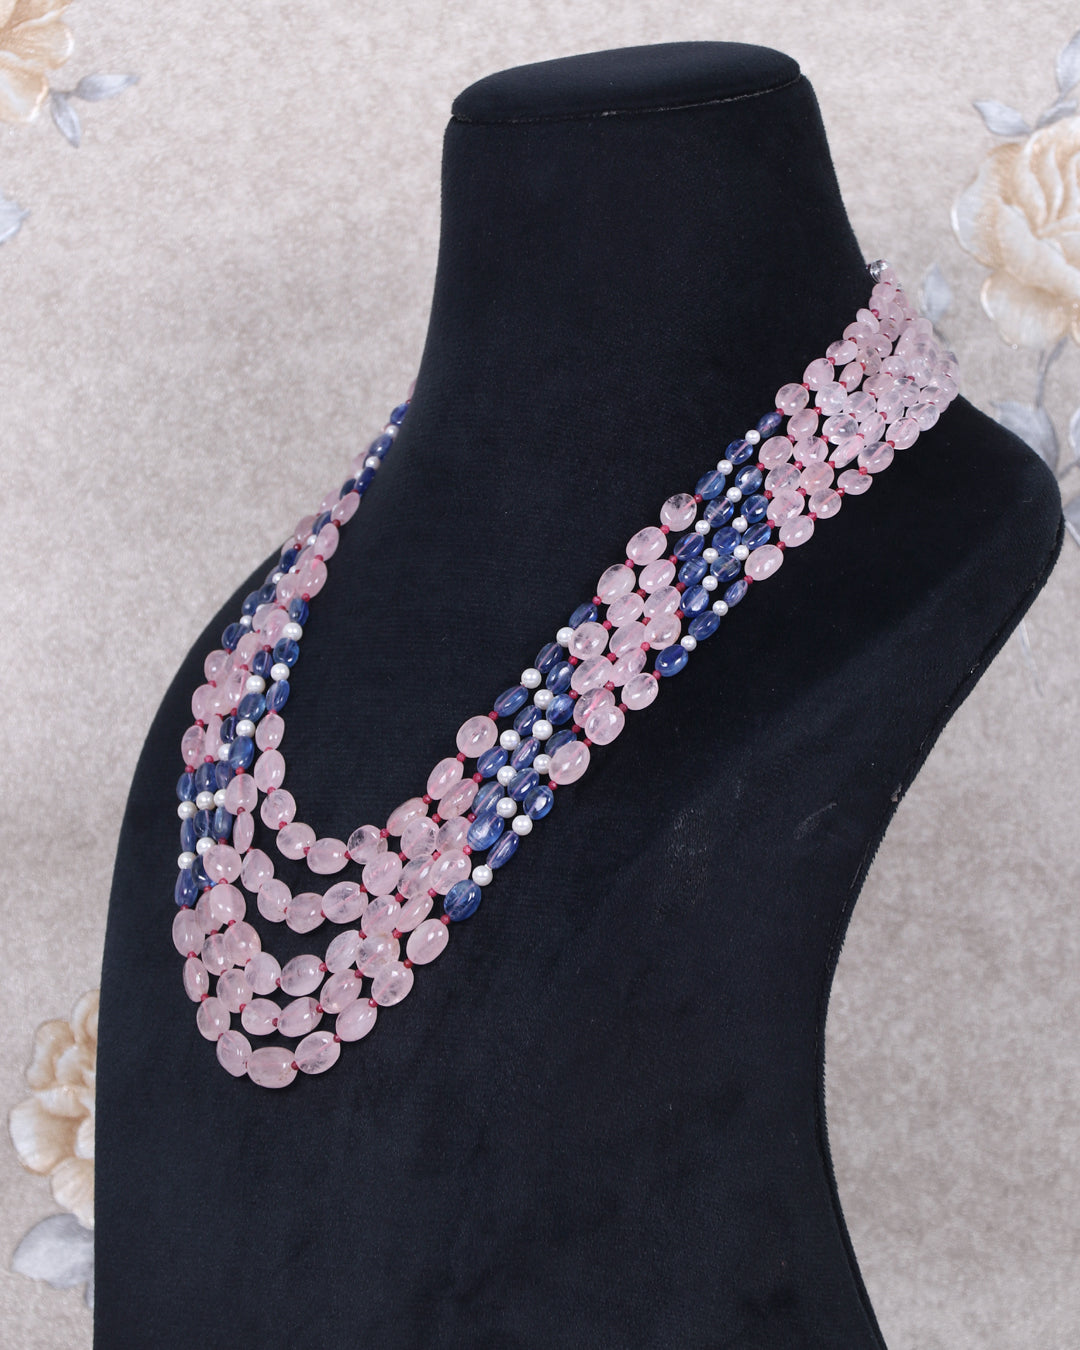 Natural Morganite & Kynaite Gemstone Beads Necklace Jewelry